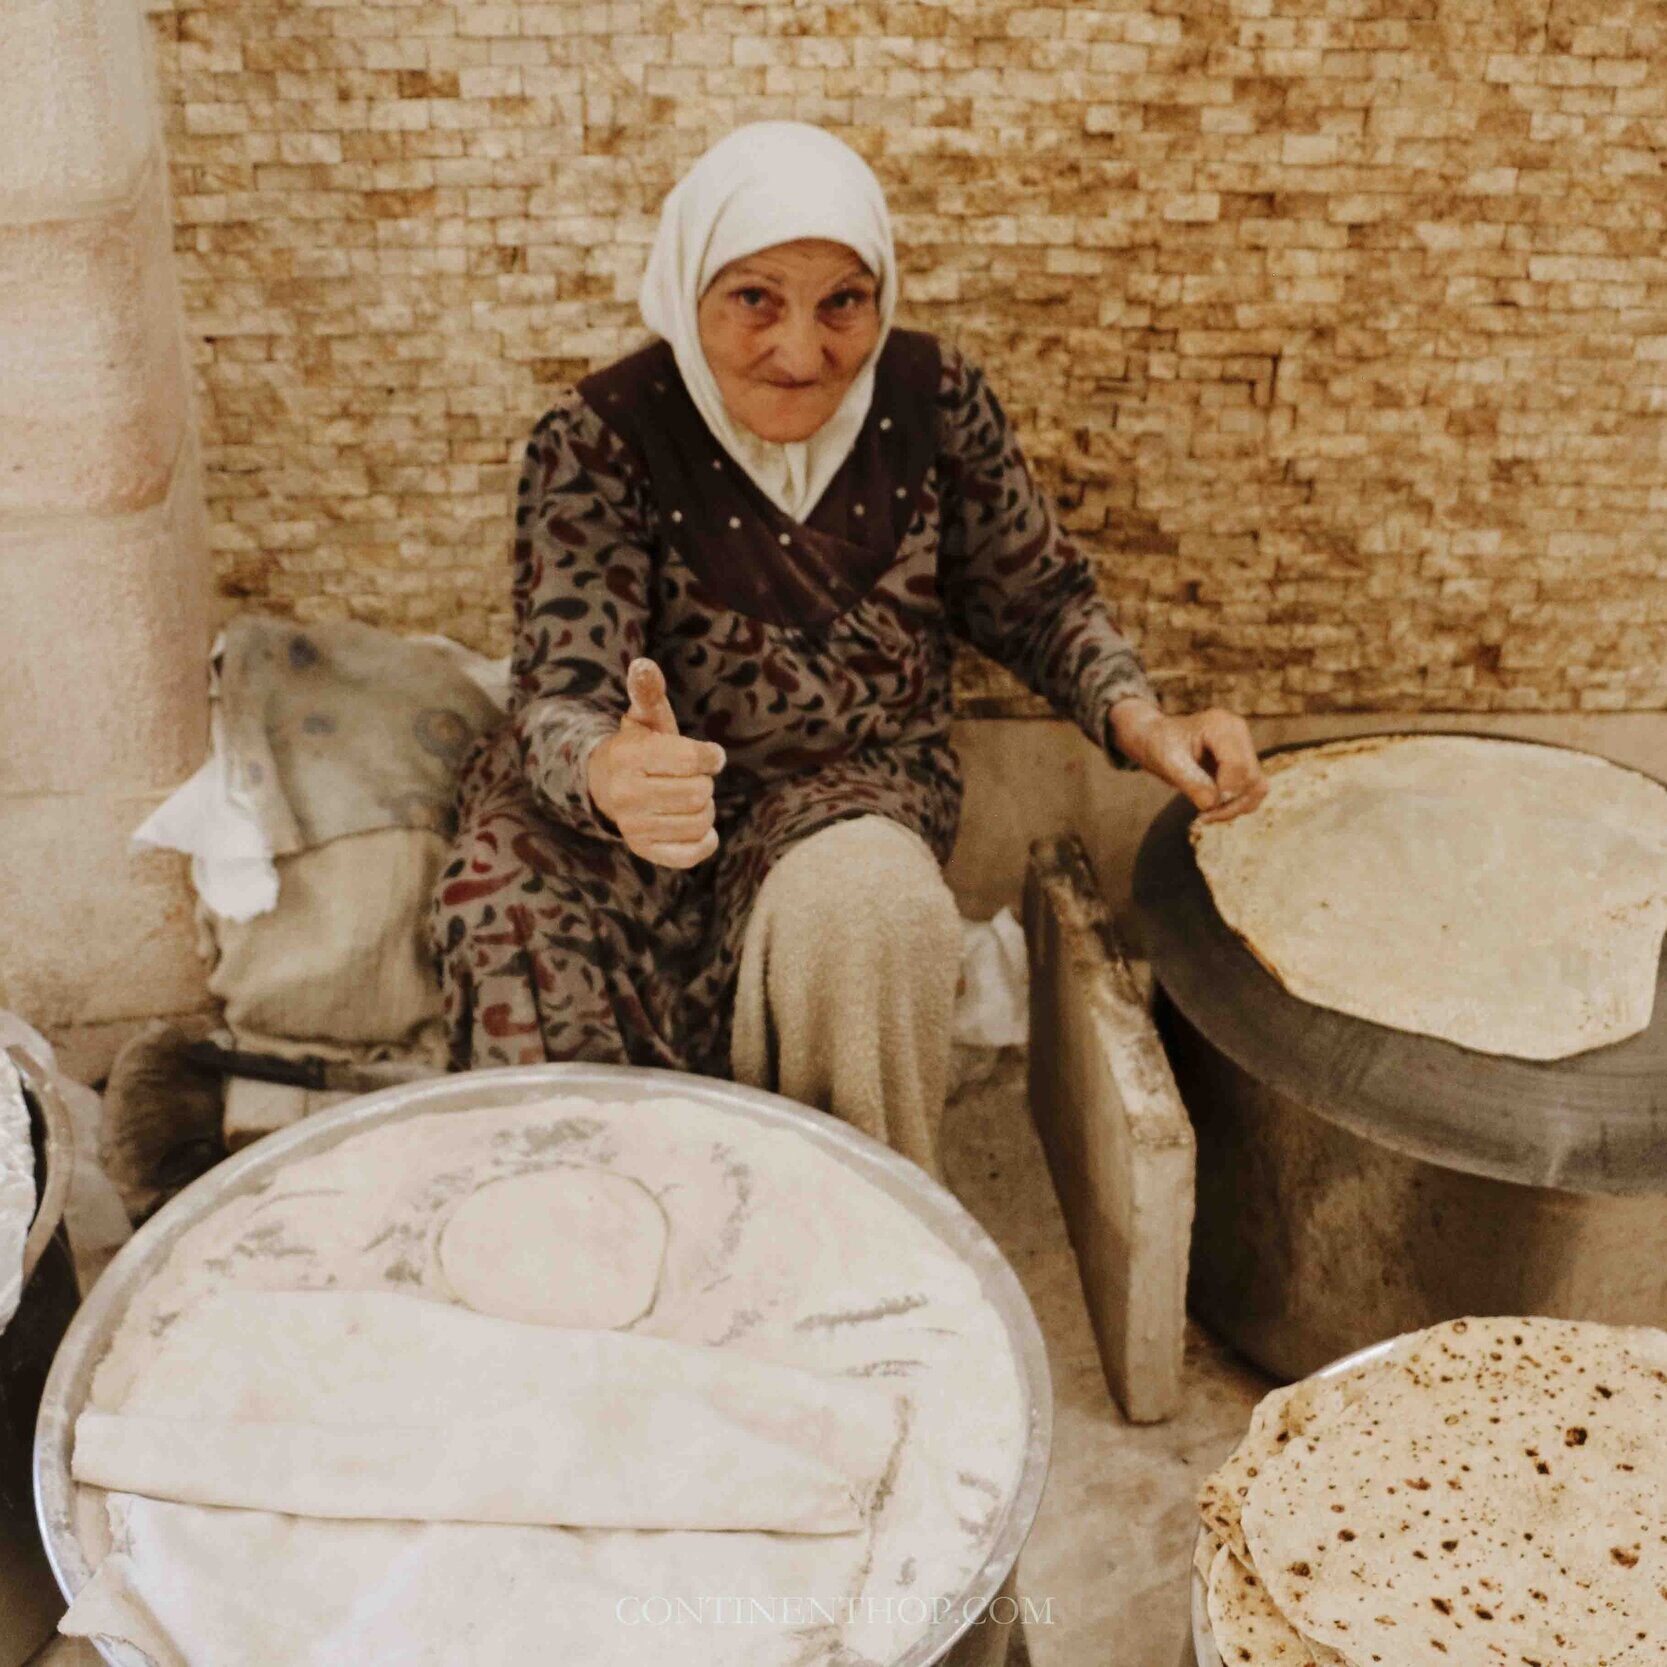 Image of old woman making bread in Jordan